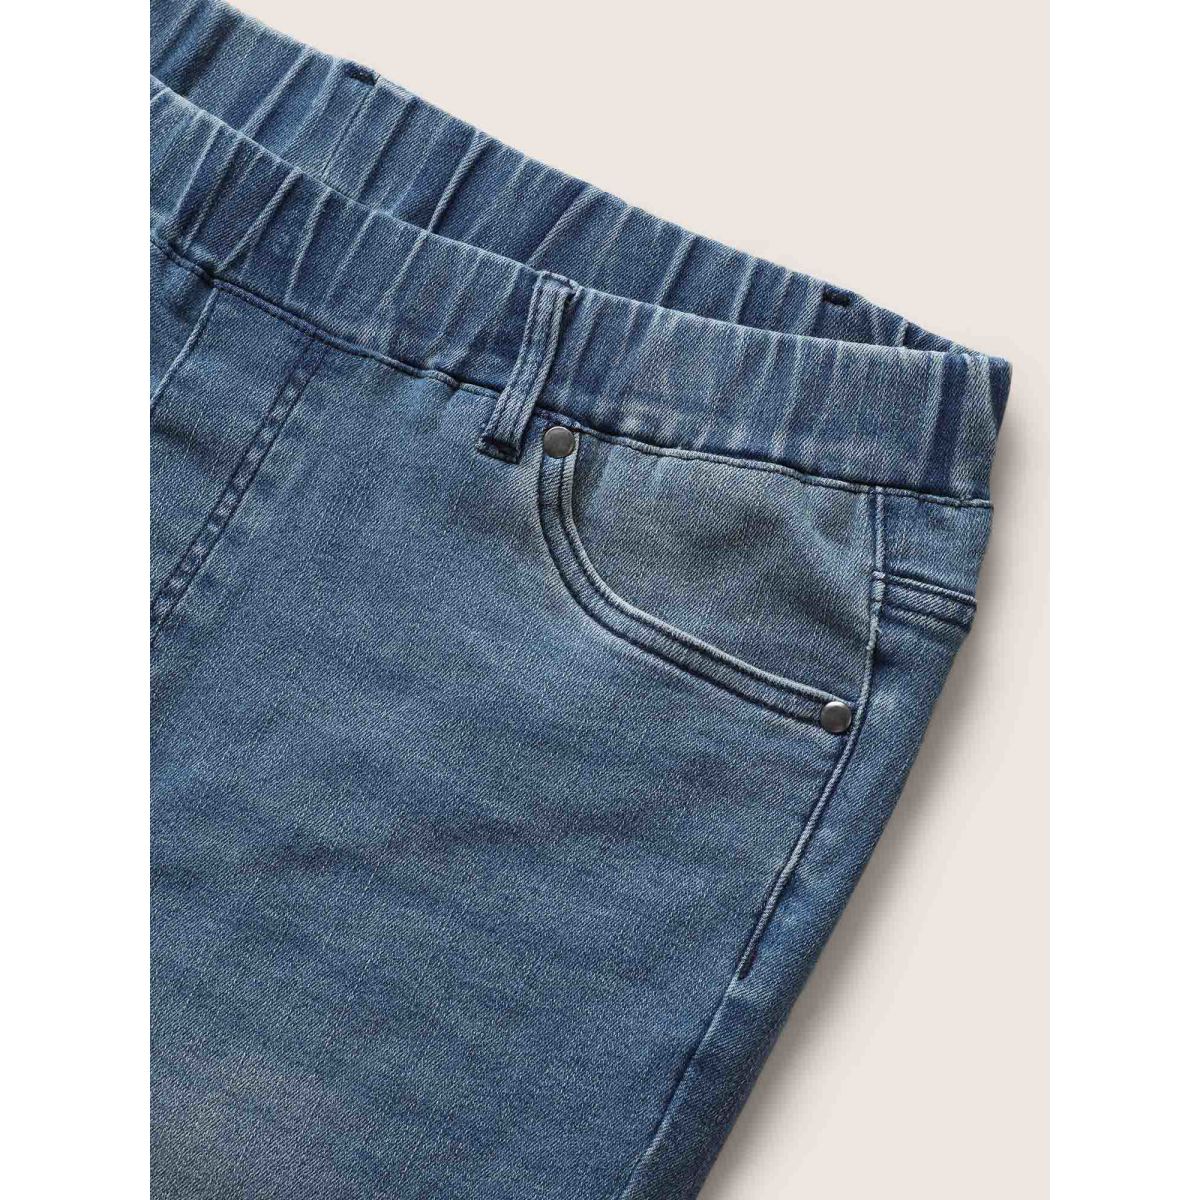 

Plus Size Medium Wash Elastic Waist Pull-on Jegging Jeans Women Blue Casual Slit High stretch Slanted pocket Jeans BloomChic